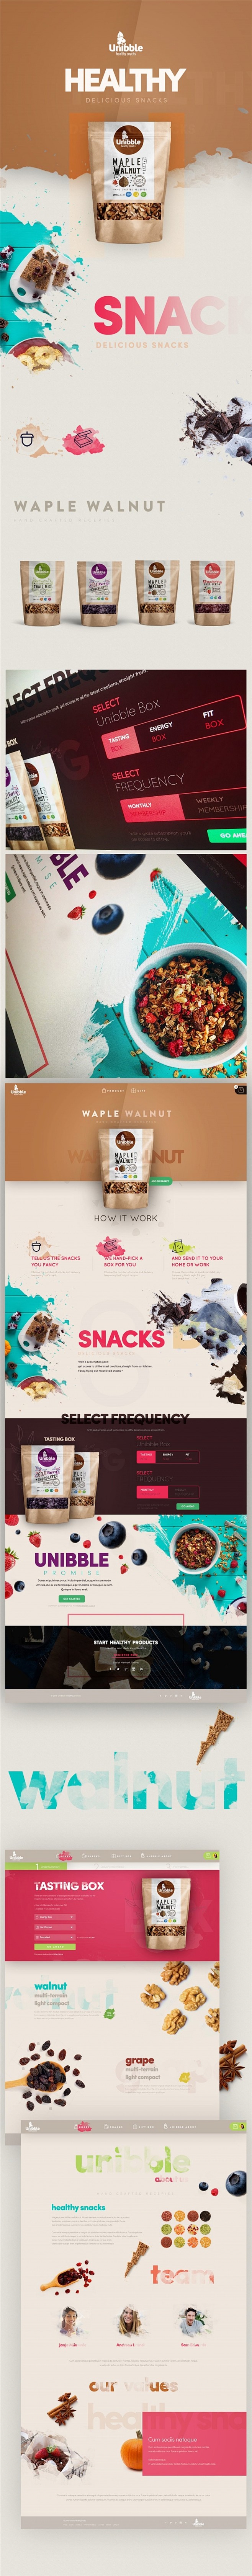 Unibble健康零食品牌包装和网站设计...